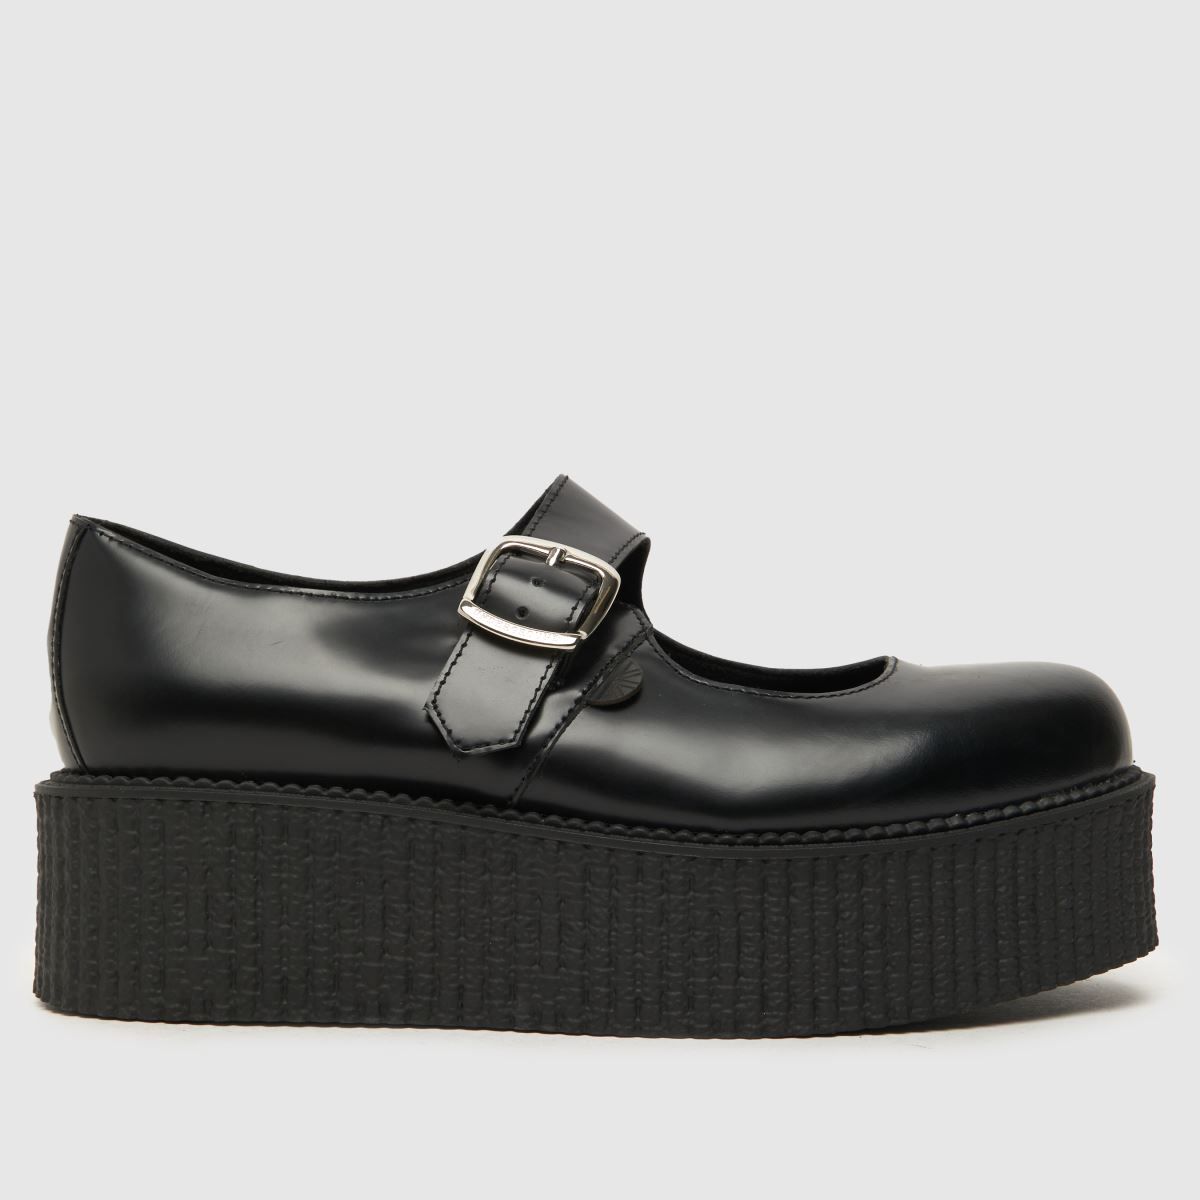 UNDERGROUND mary jane creeper flat shoes in black